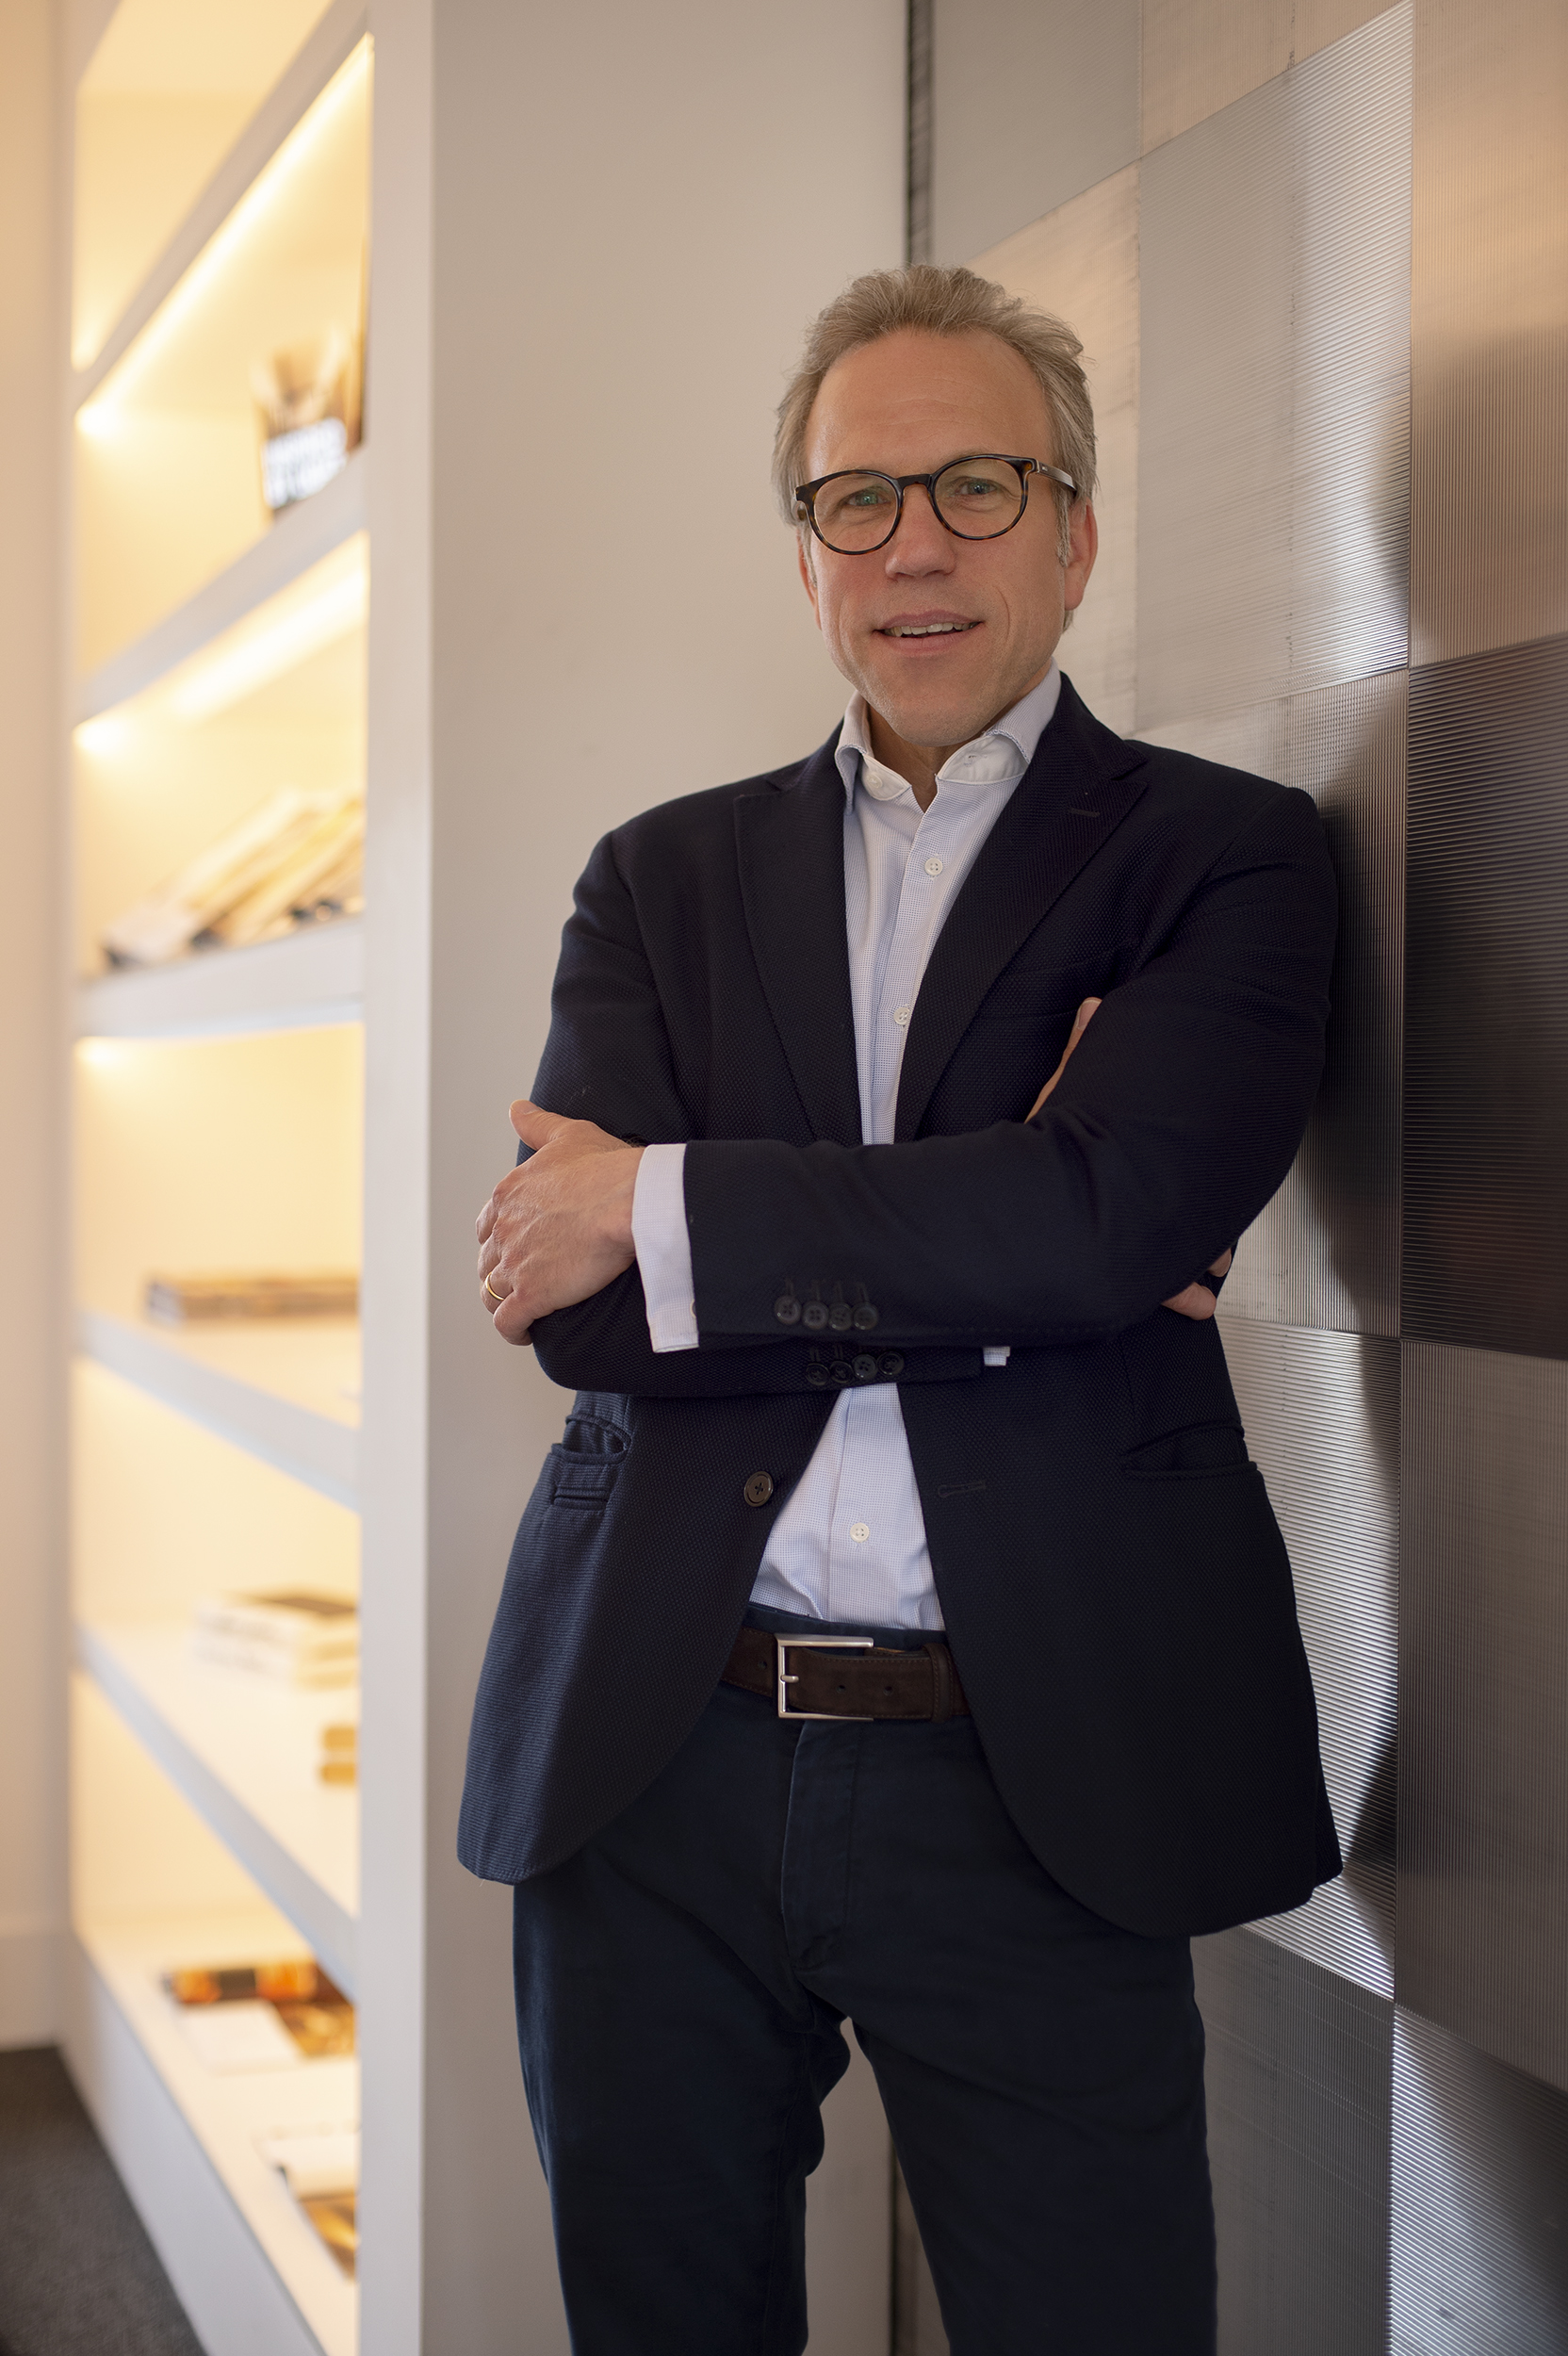 Herman Van Driel joins John Cullen lighting as CEO